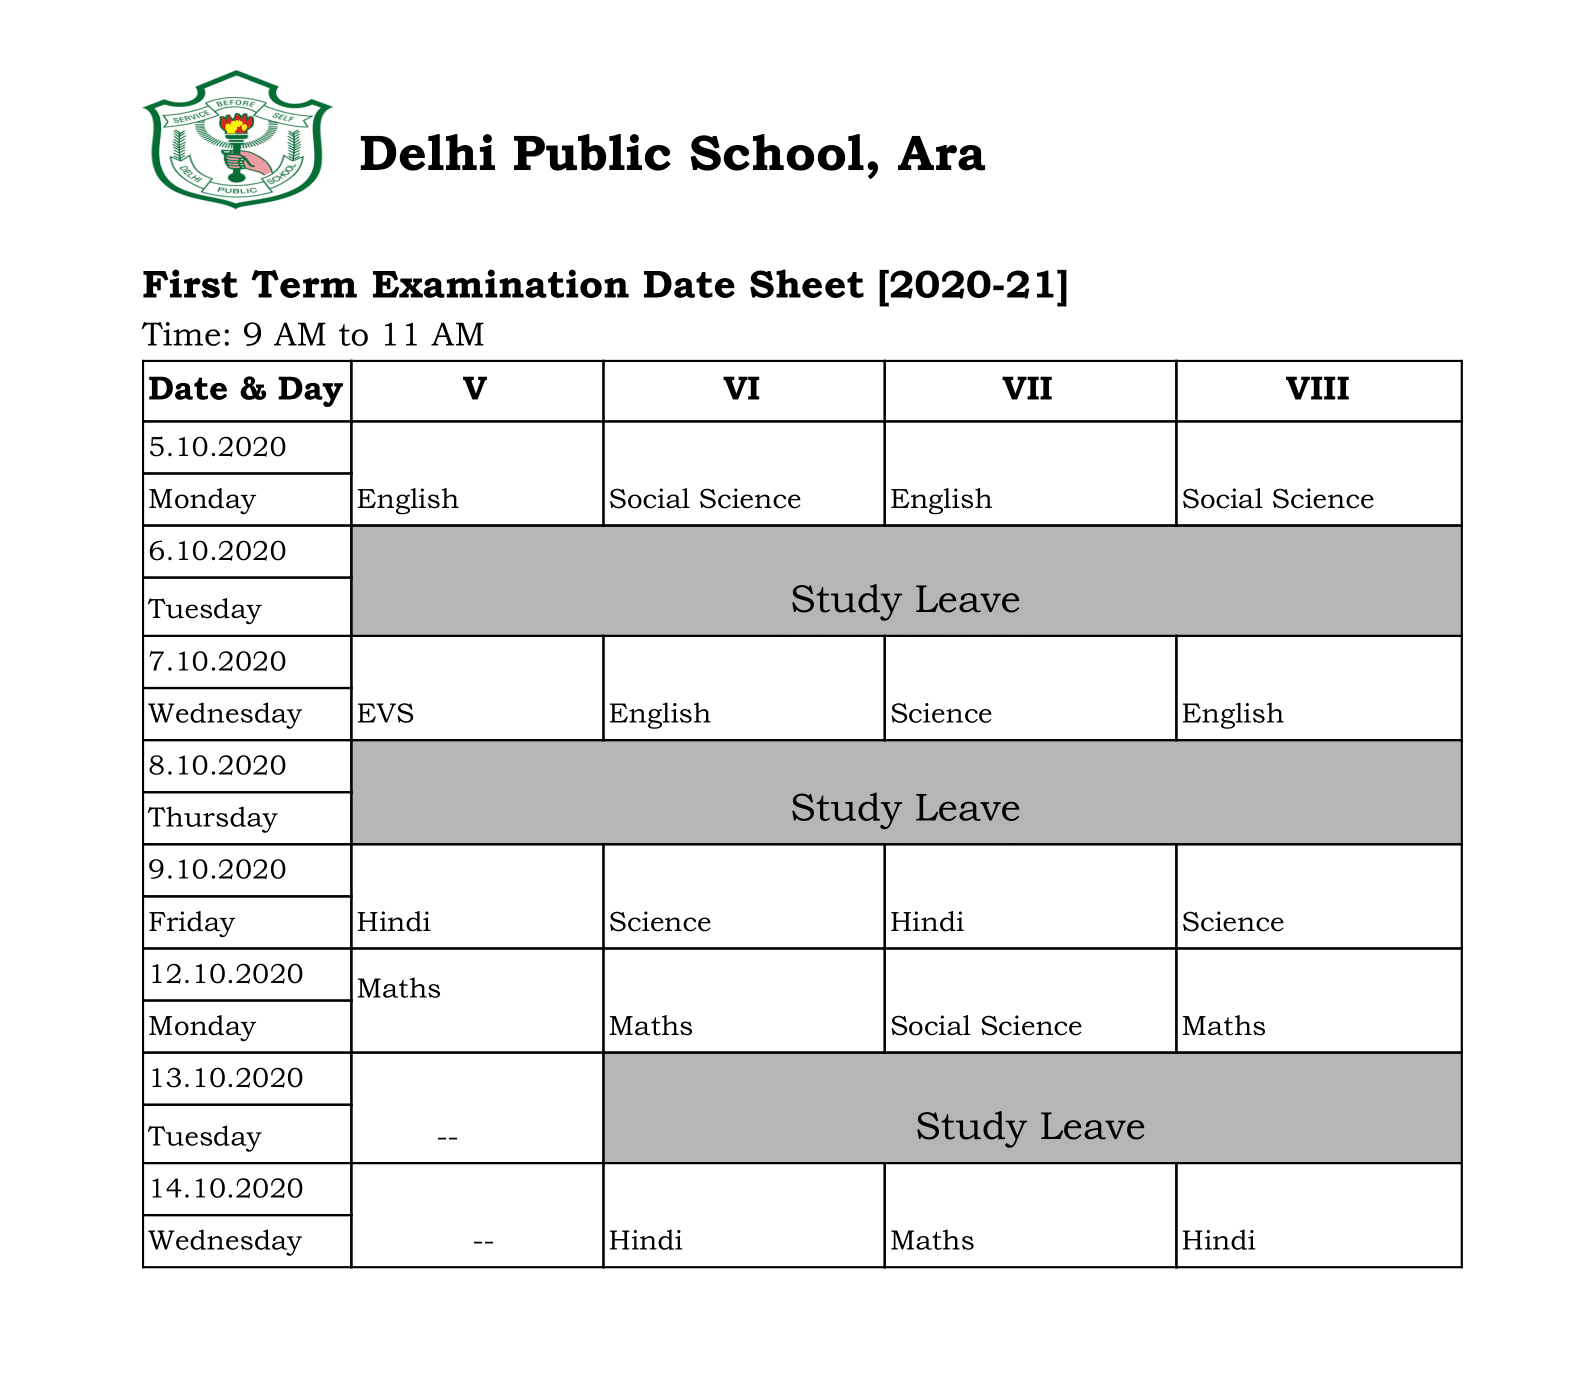 Fondos Telégrafo talento First Term Examination Date sheet (2020) - DPS Ara